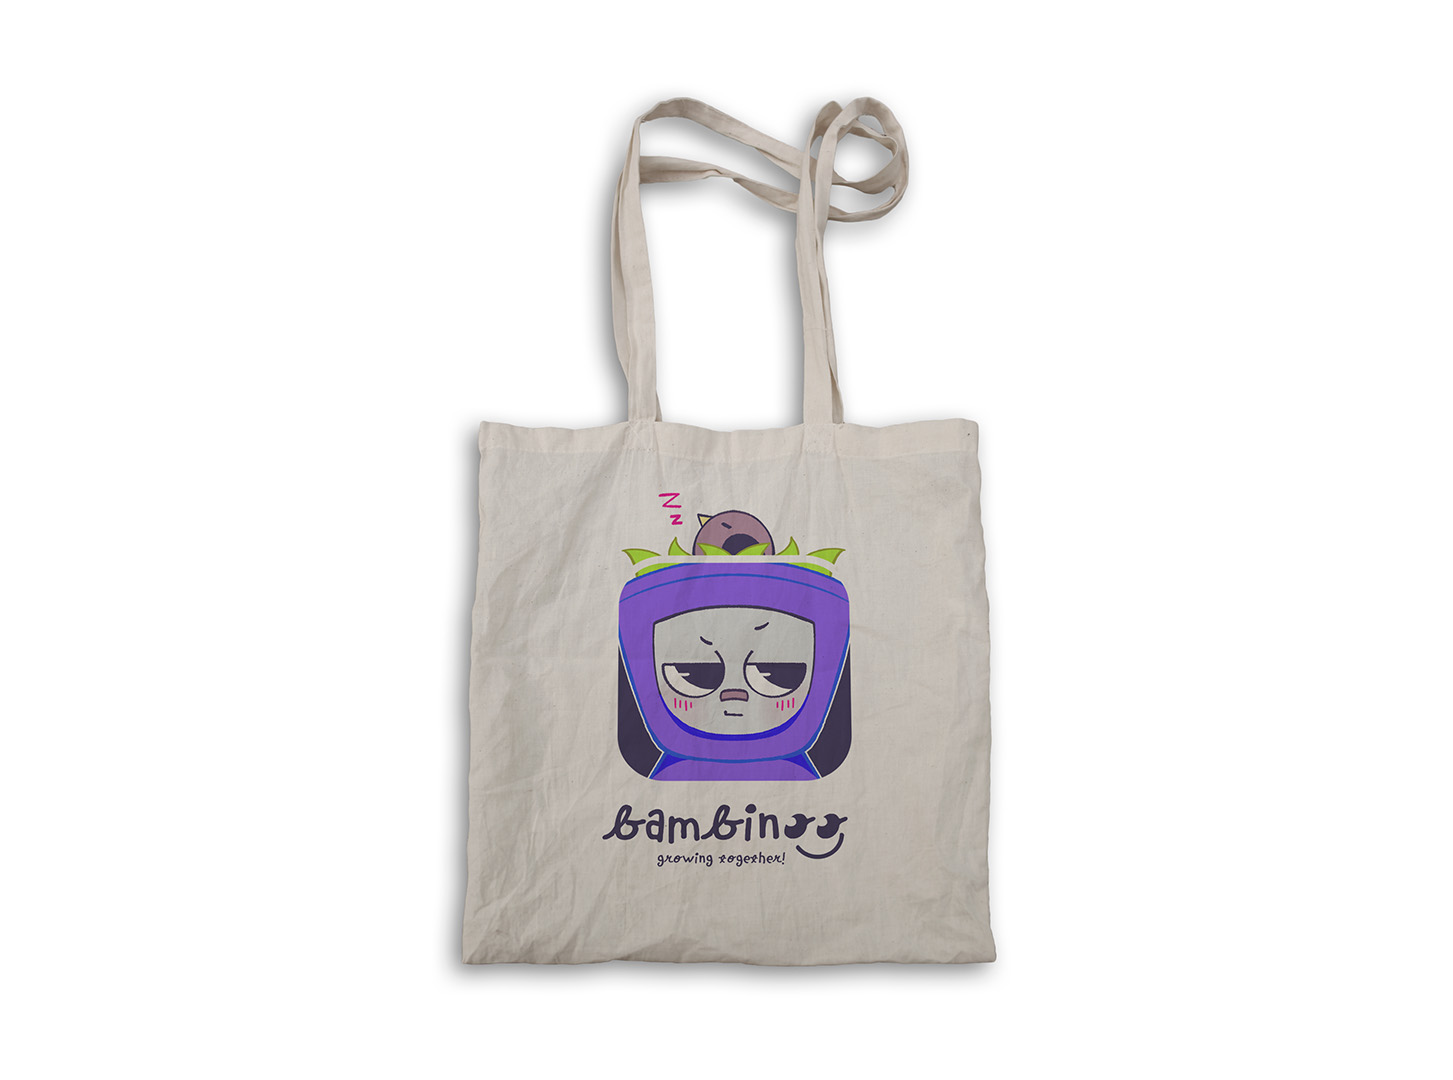 Tote bag with purple Bambinoo character design